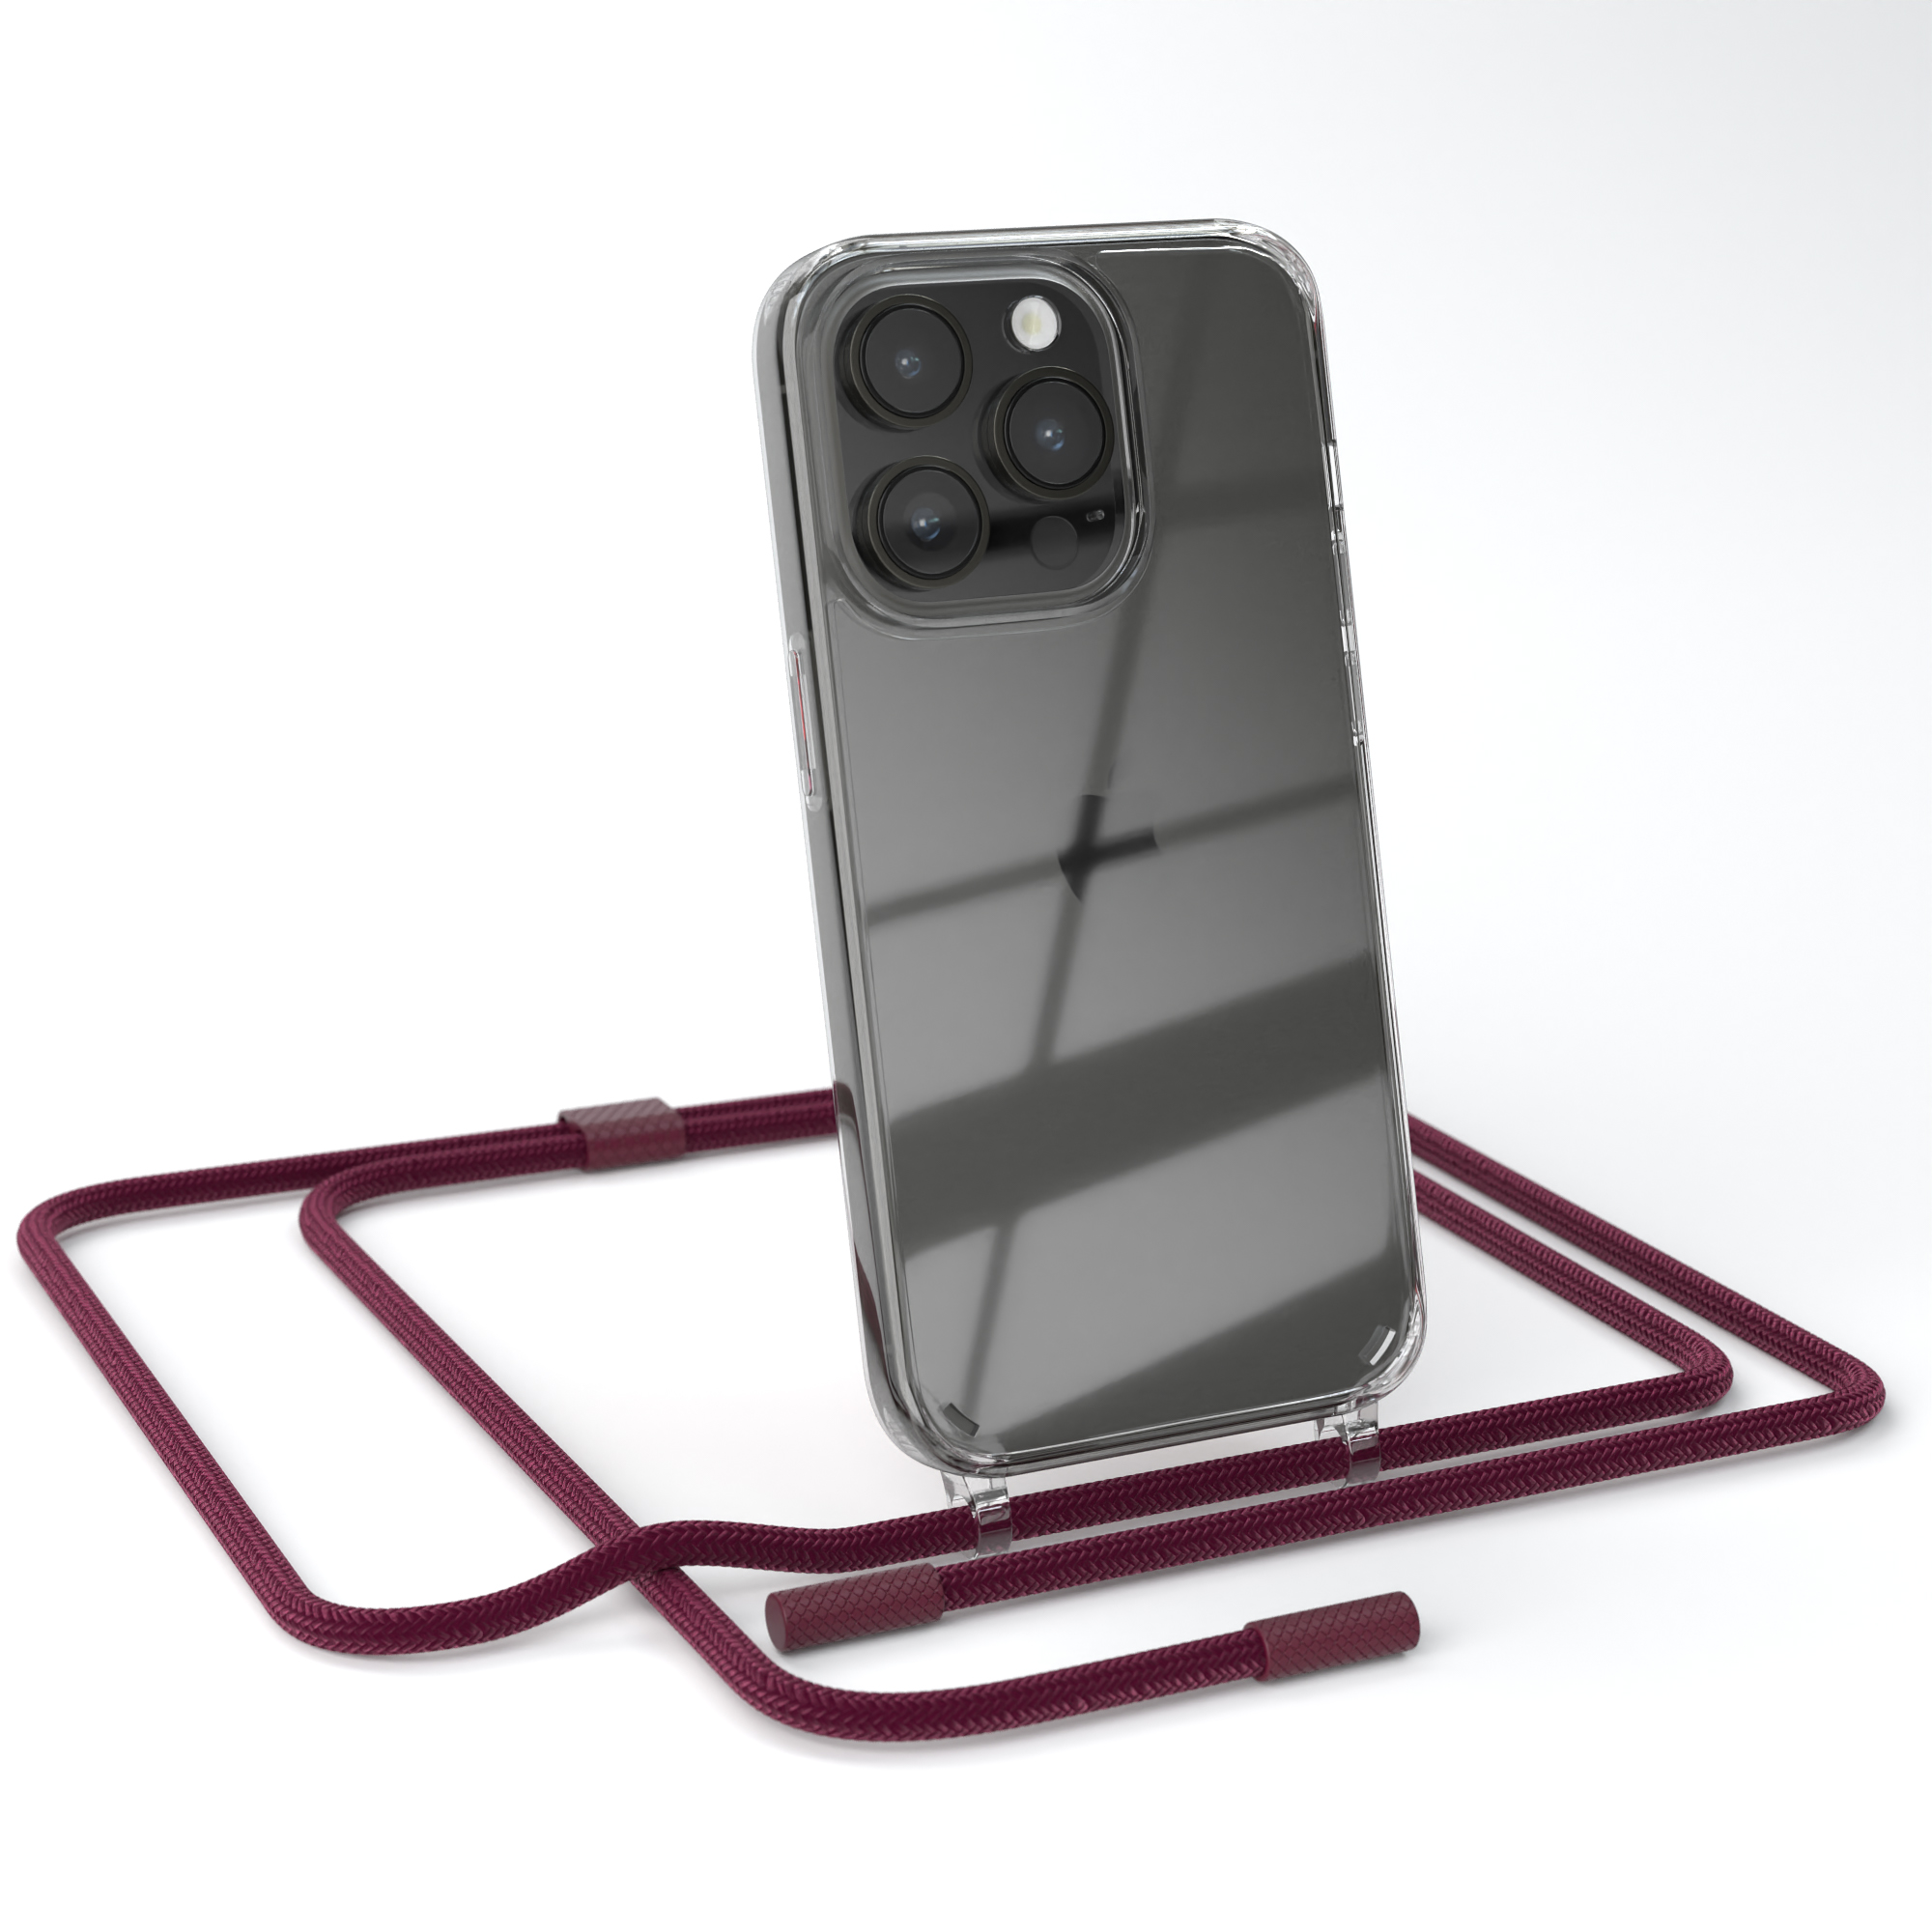 EAZY CASE Transparente Handyhülle Rot / unifarbend, runder Bordeaux Pro, iPhone Apple, Kette mit 14 Umhängetasche, Beere